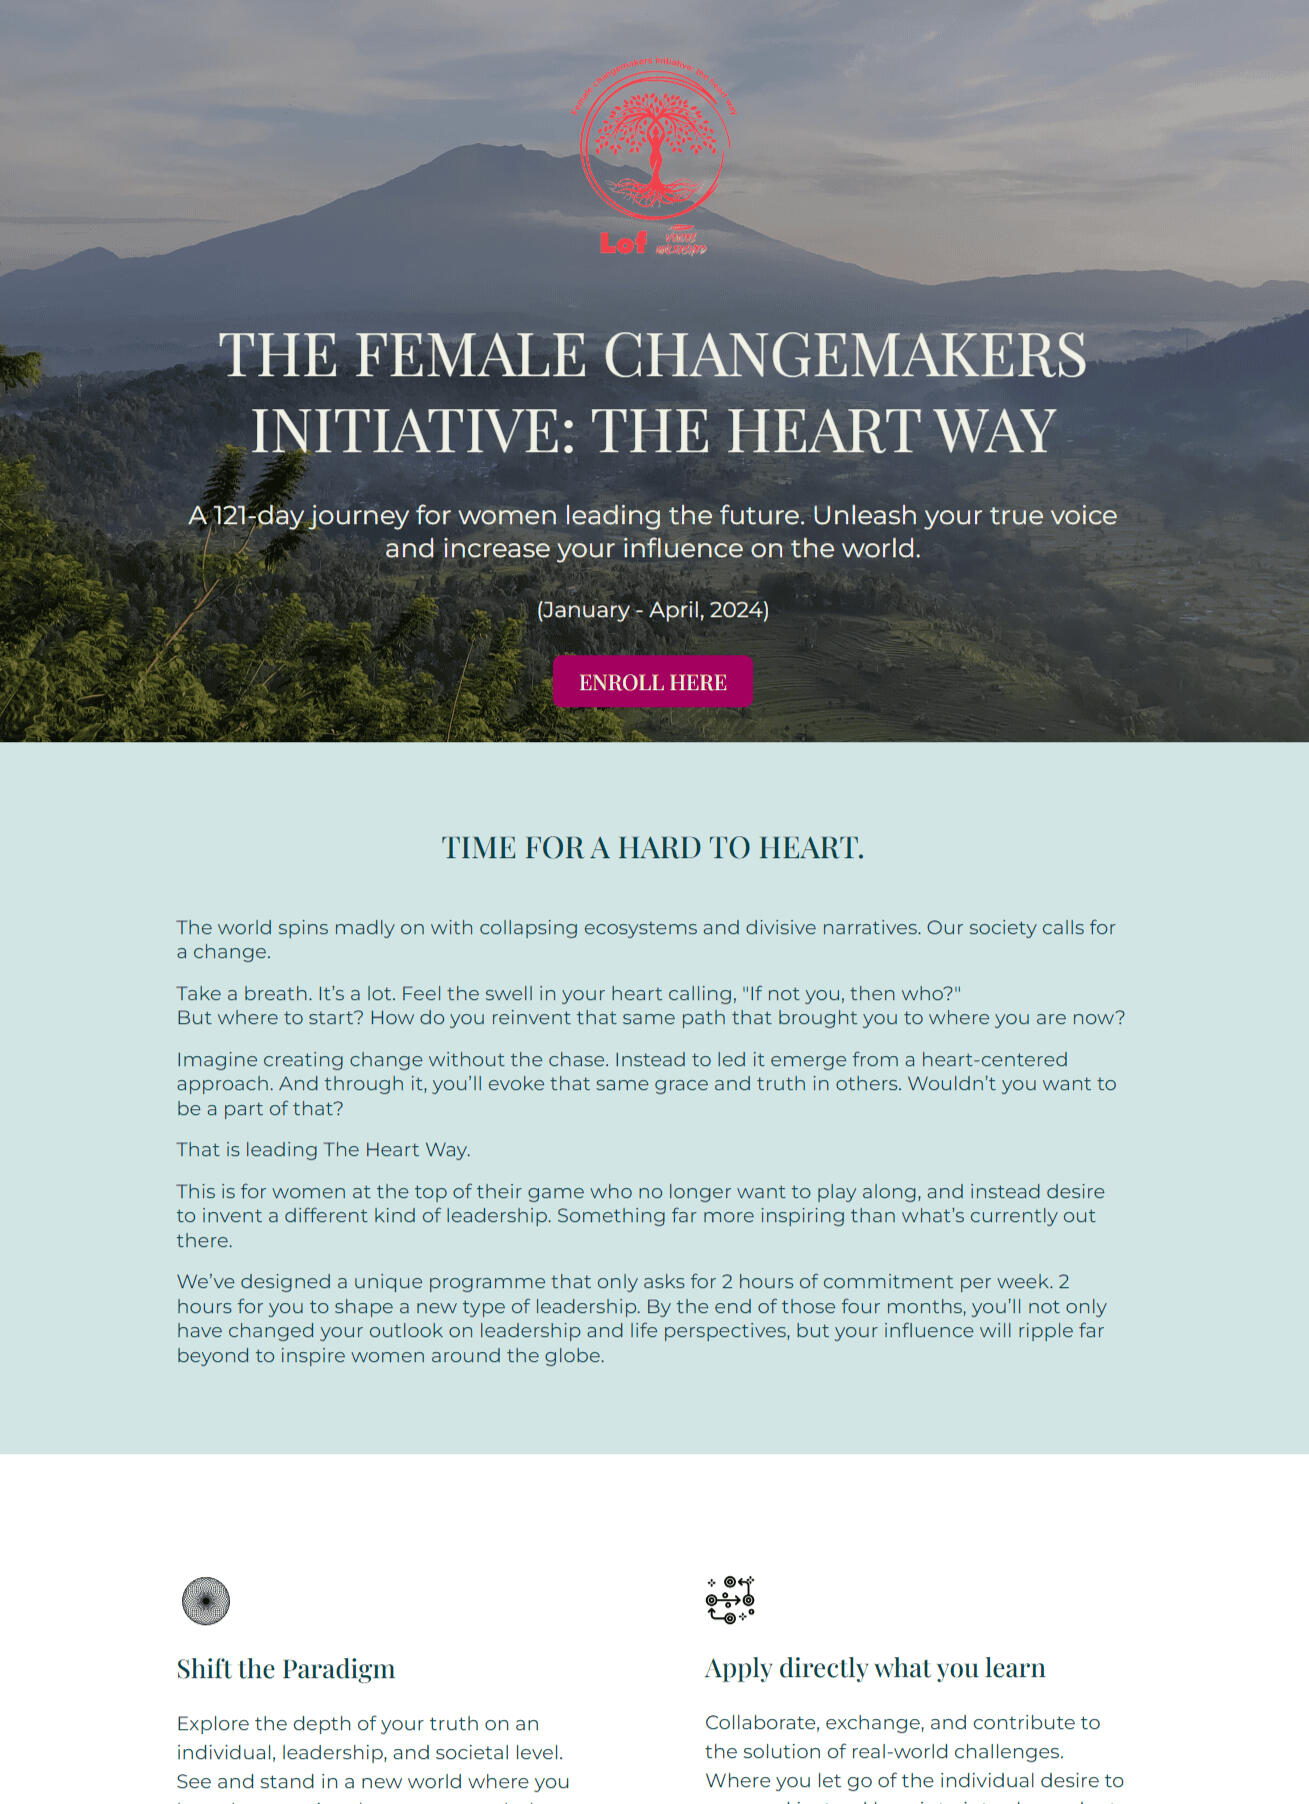 tte female changemakers initiative landing page screenshot